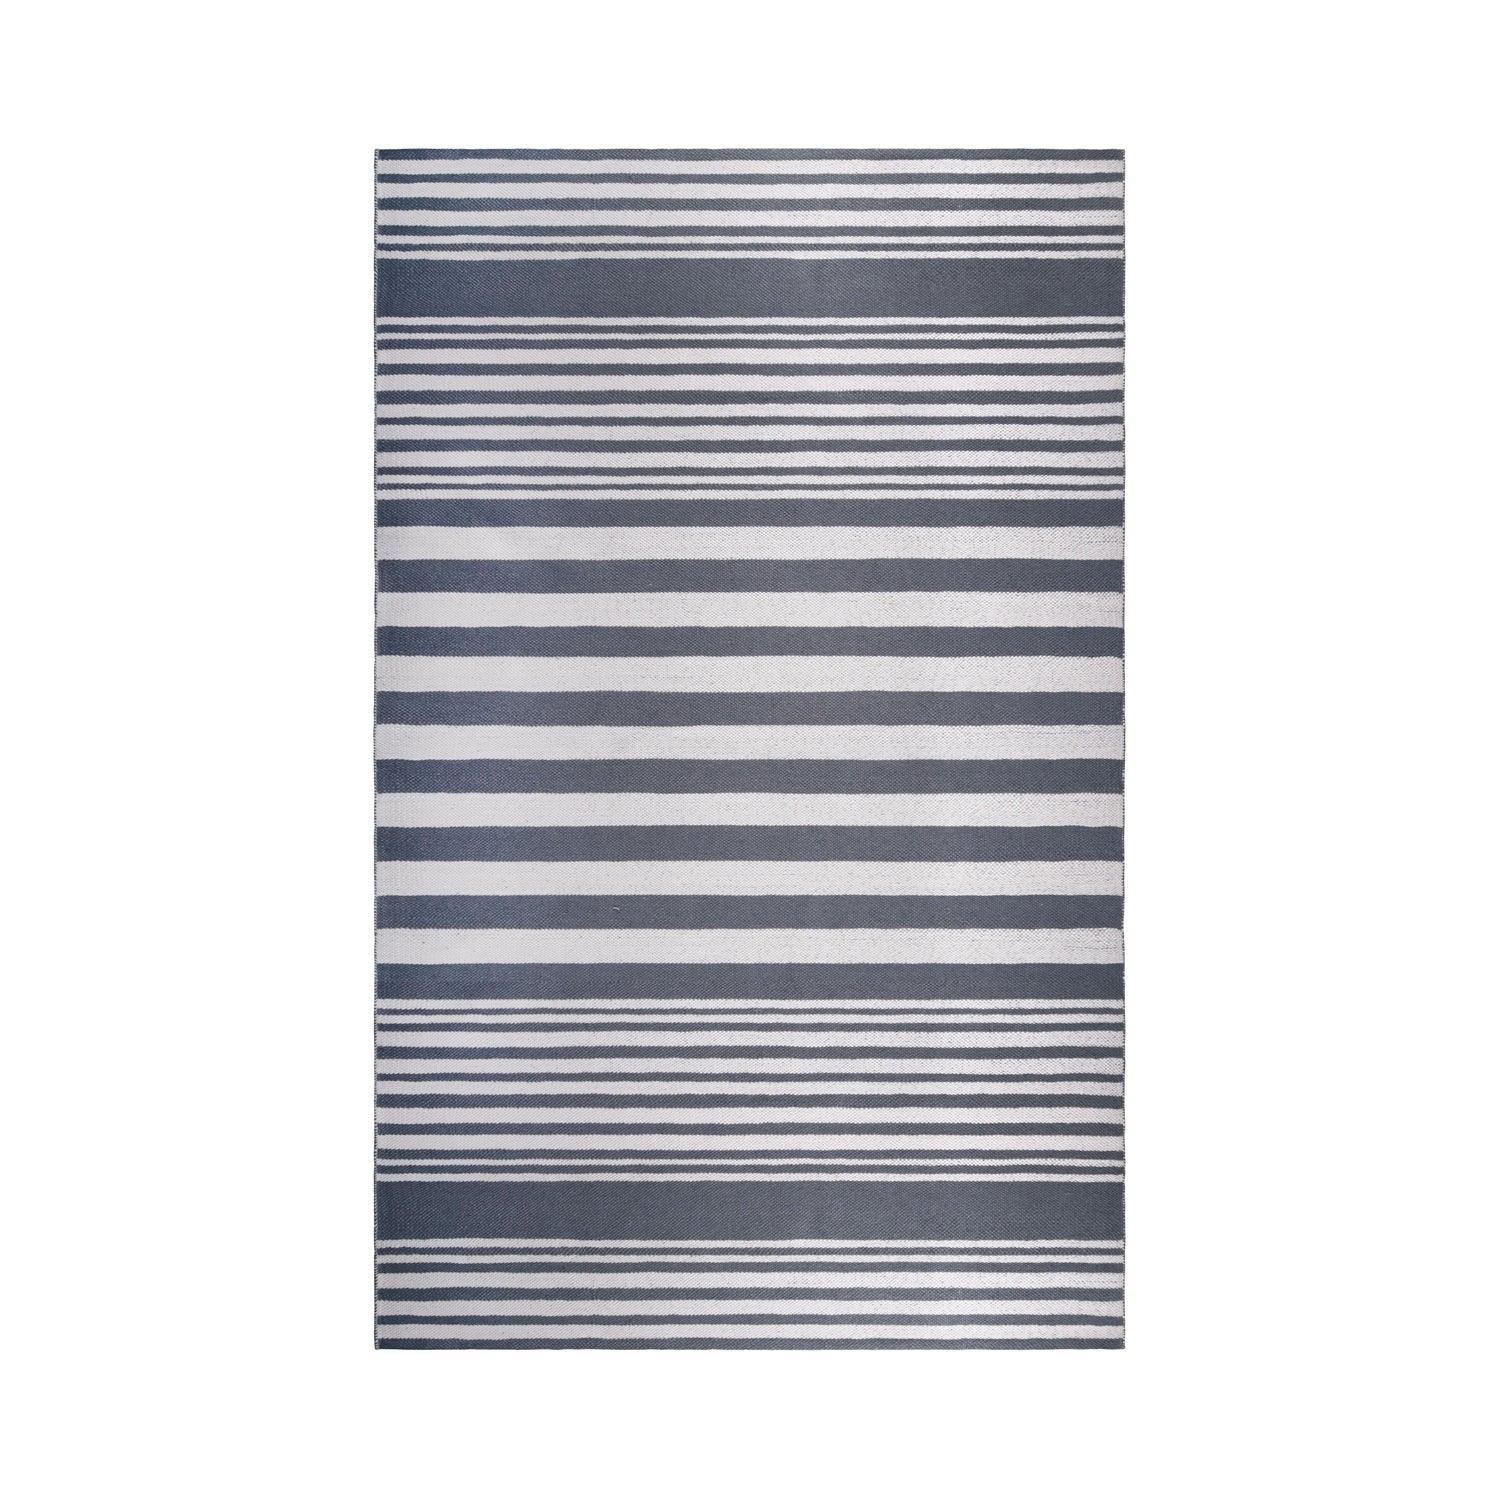  Superior Modern Stripes Large Indoor Outdoor Pattern Area Rug - Grey